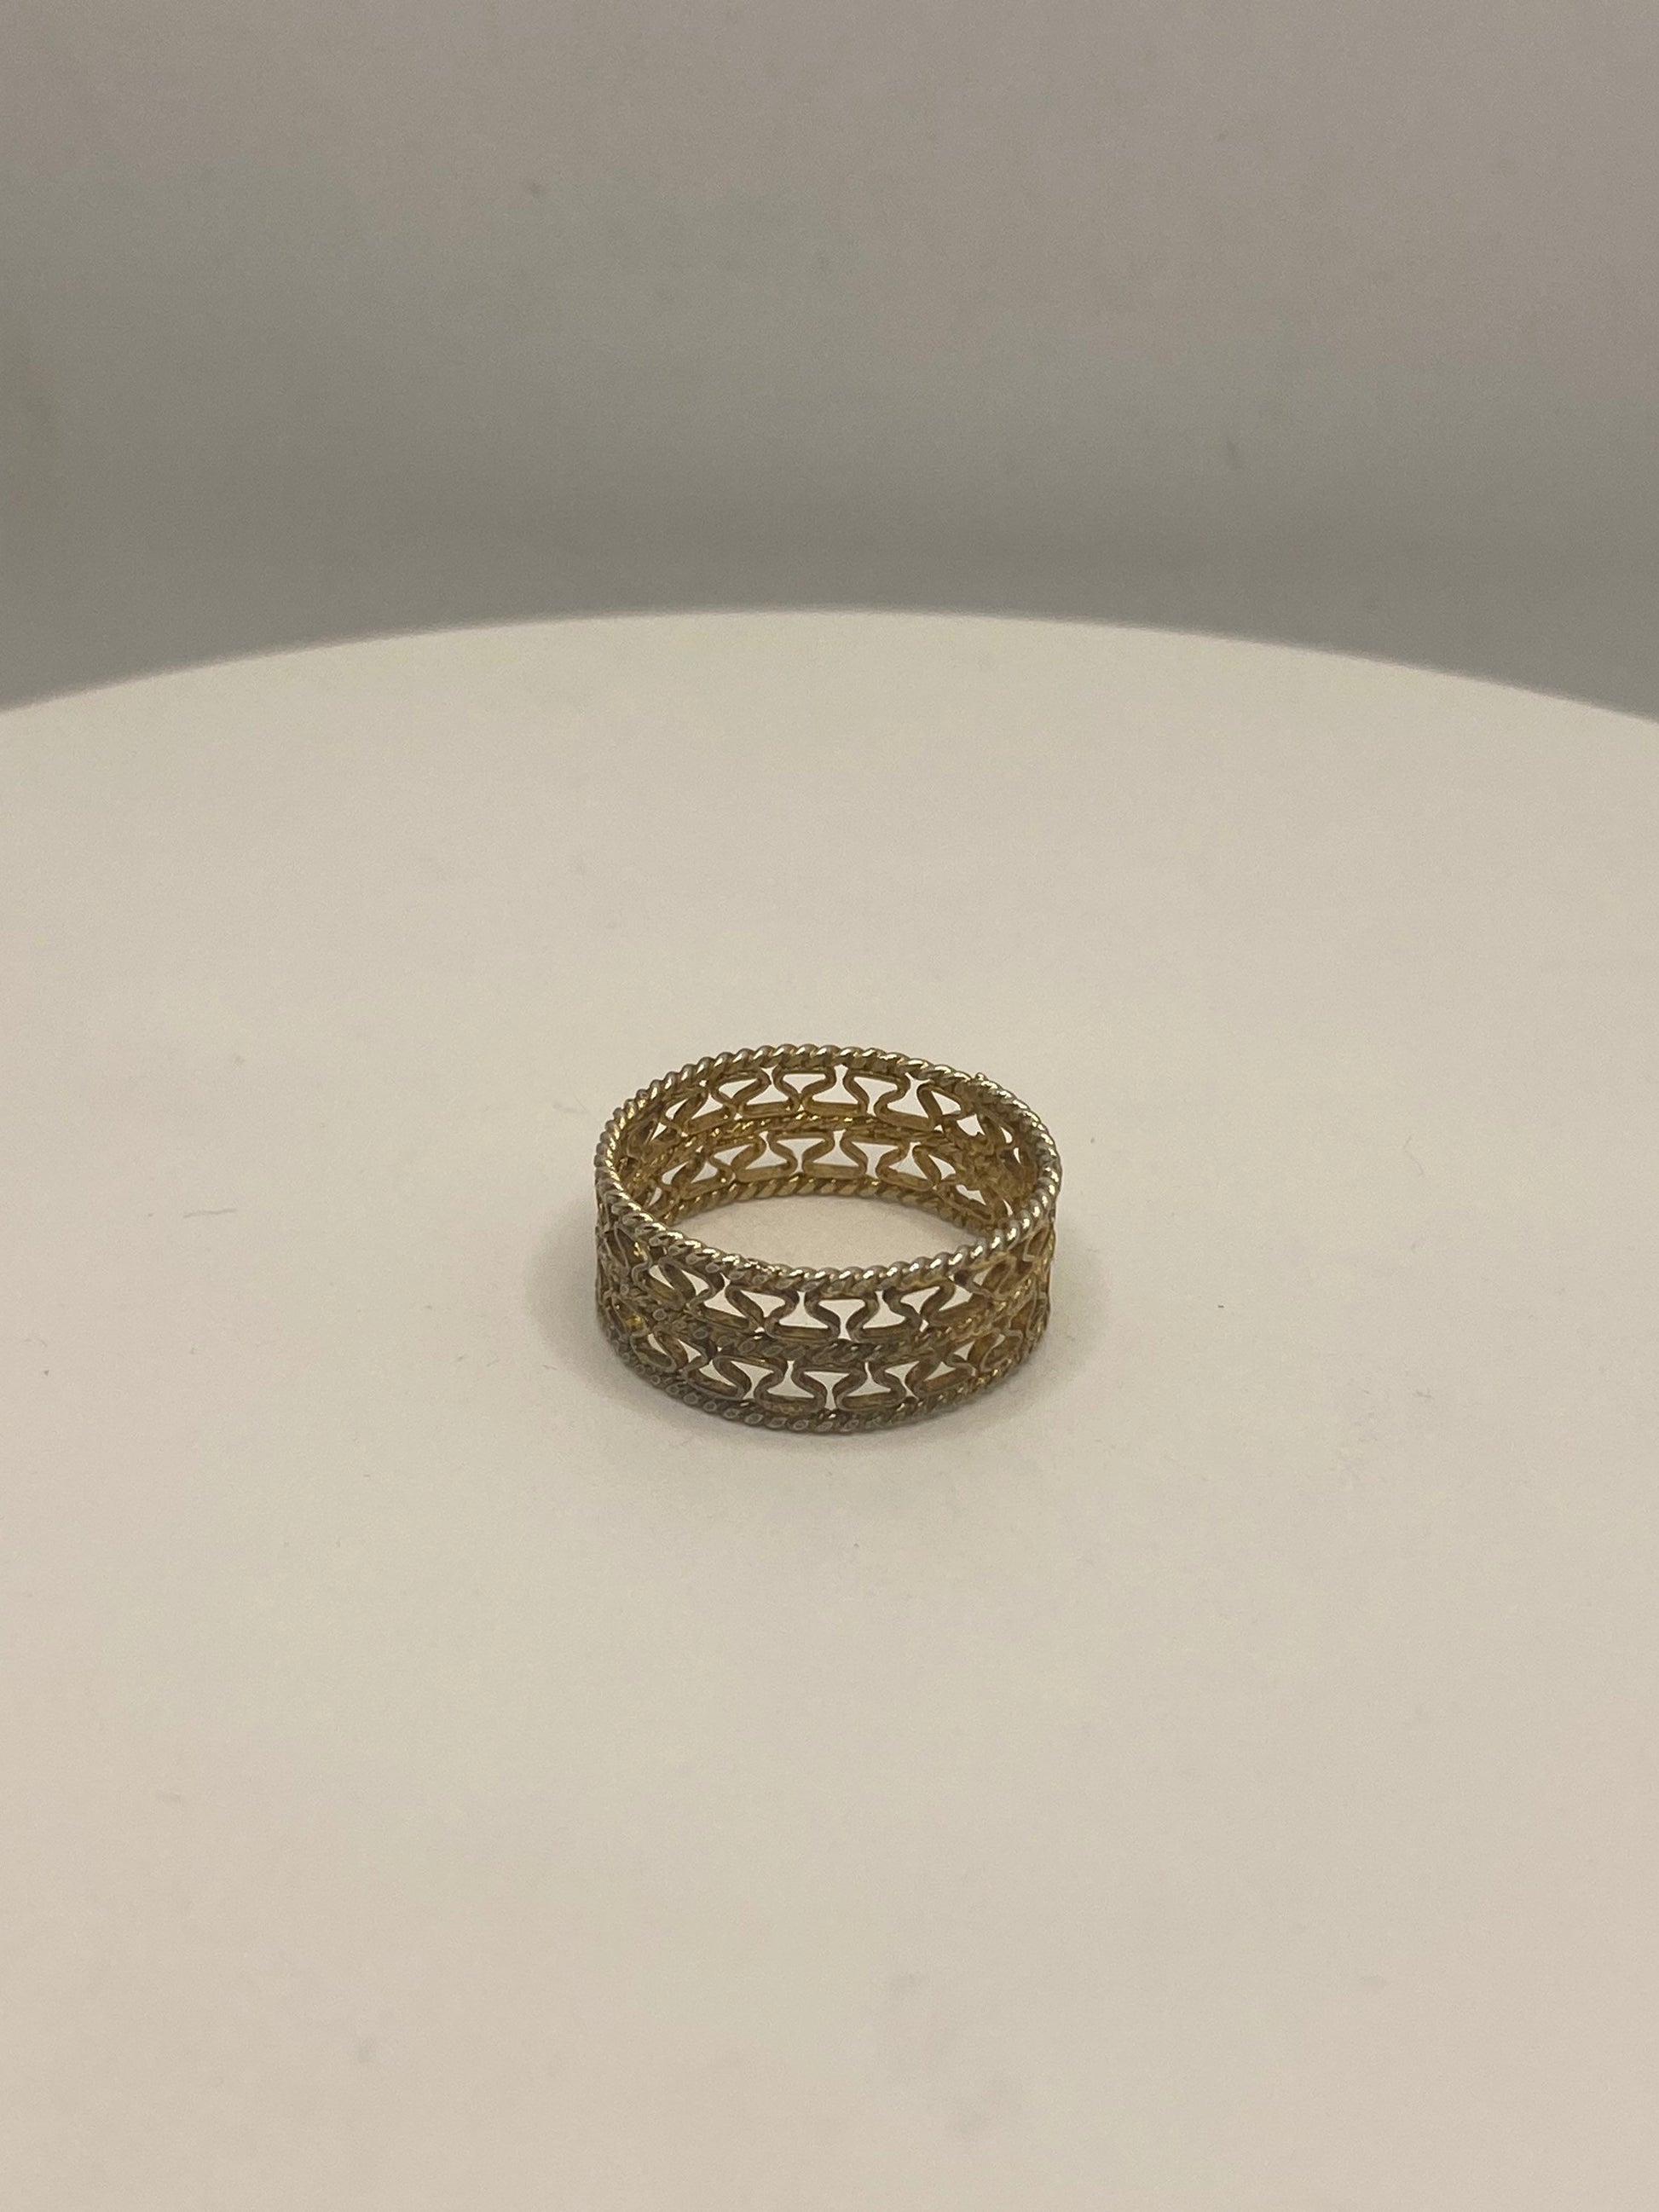 Vintage Wedding Band Ring Golden 925 Sterling Silver Size 6